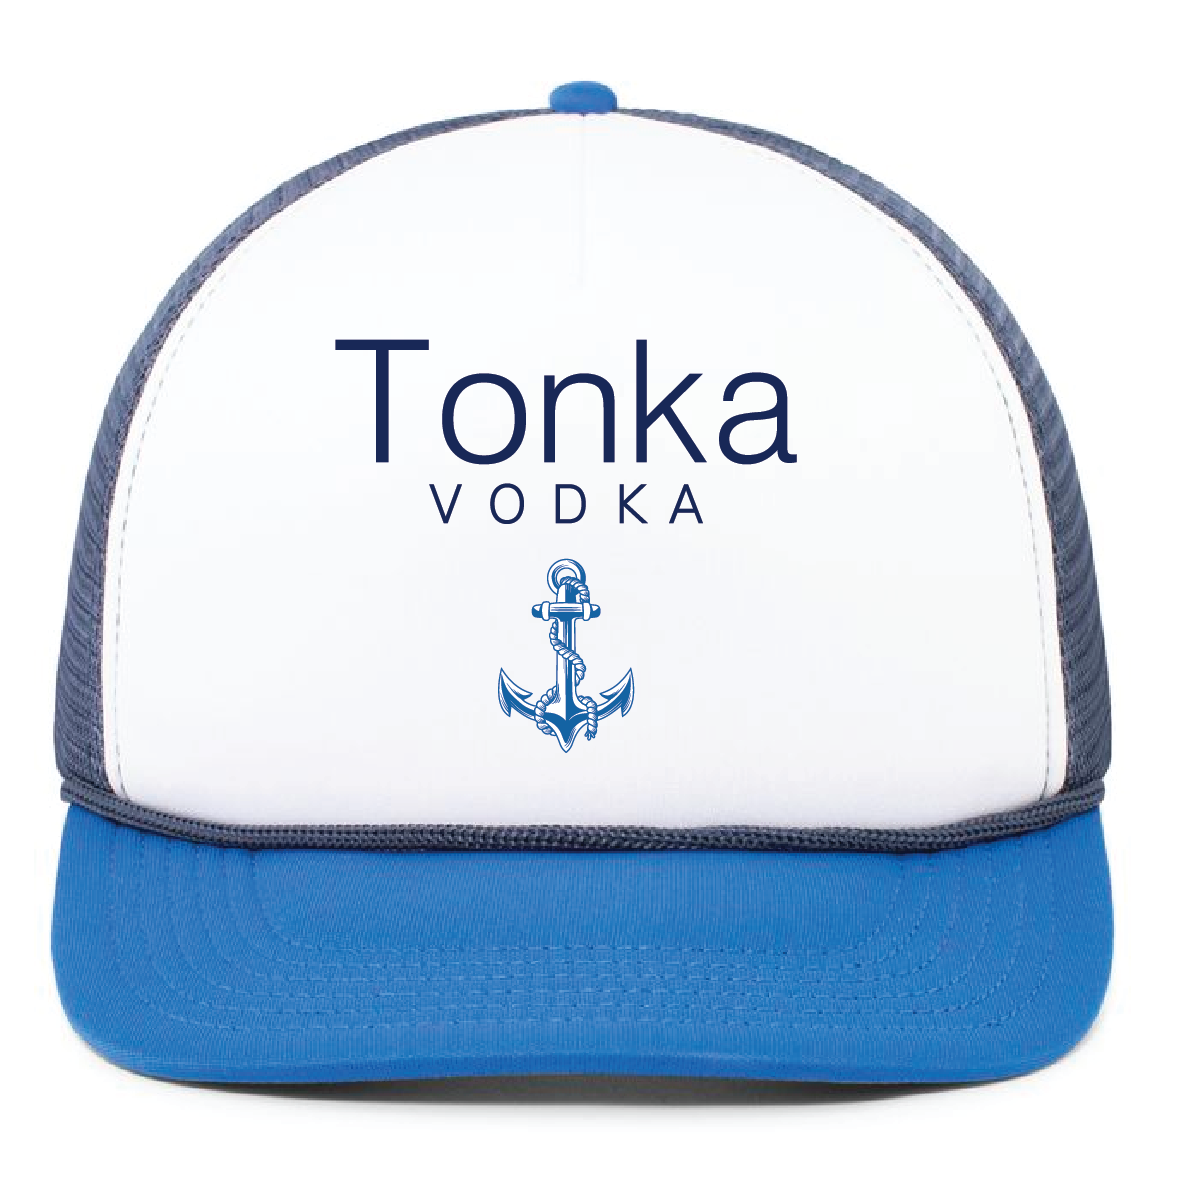 Tonka Vodka - Foam Trucker